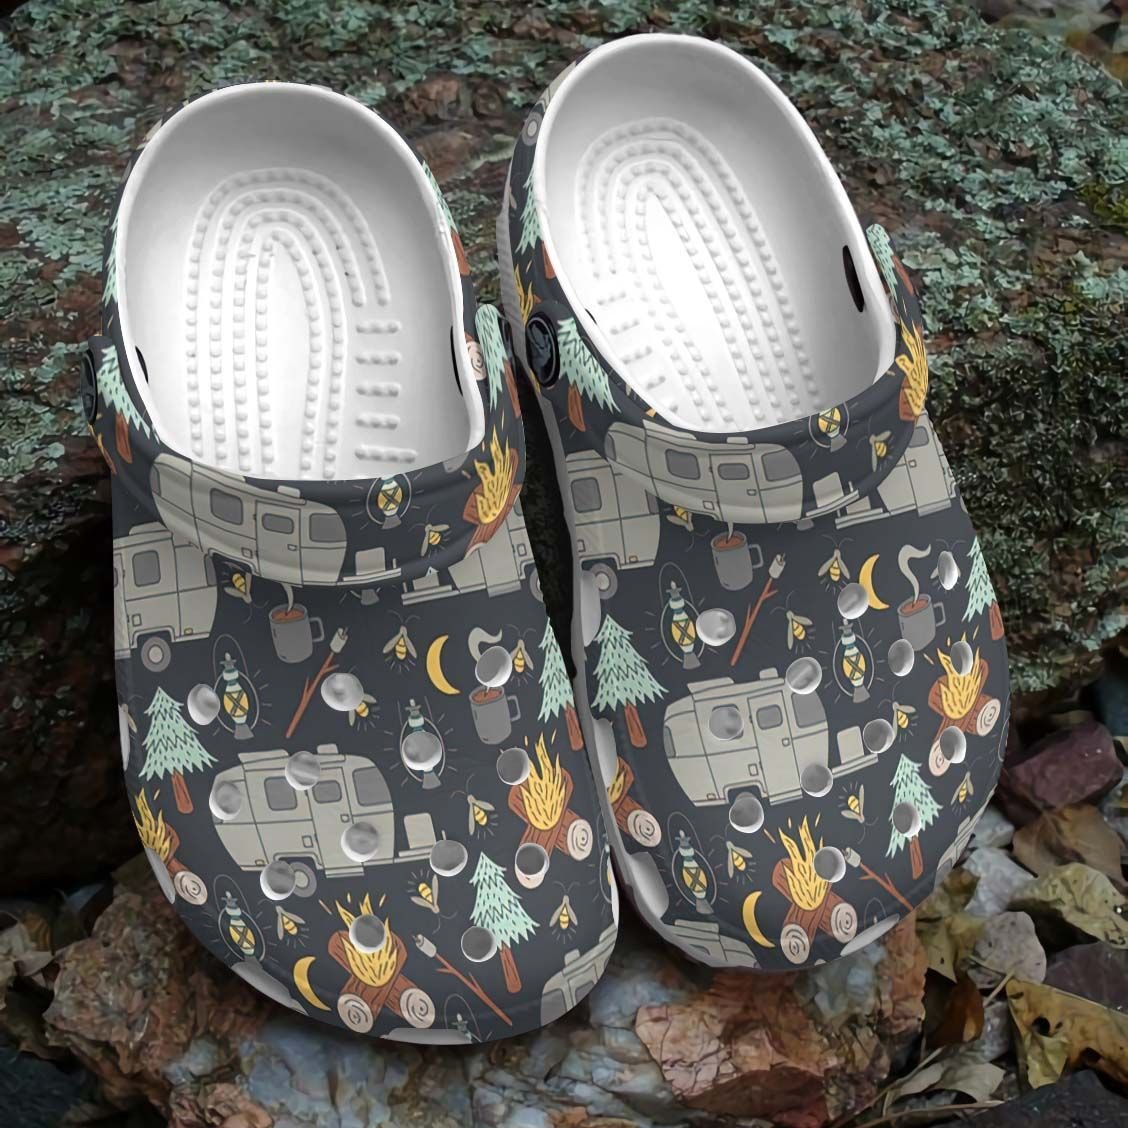 Retro Camping Crocs Clog Shoes  Simple Camp In Wood Clog Crocbland Clog Birthday Gift For Man Woman